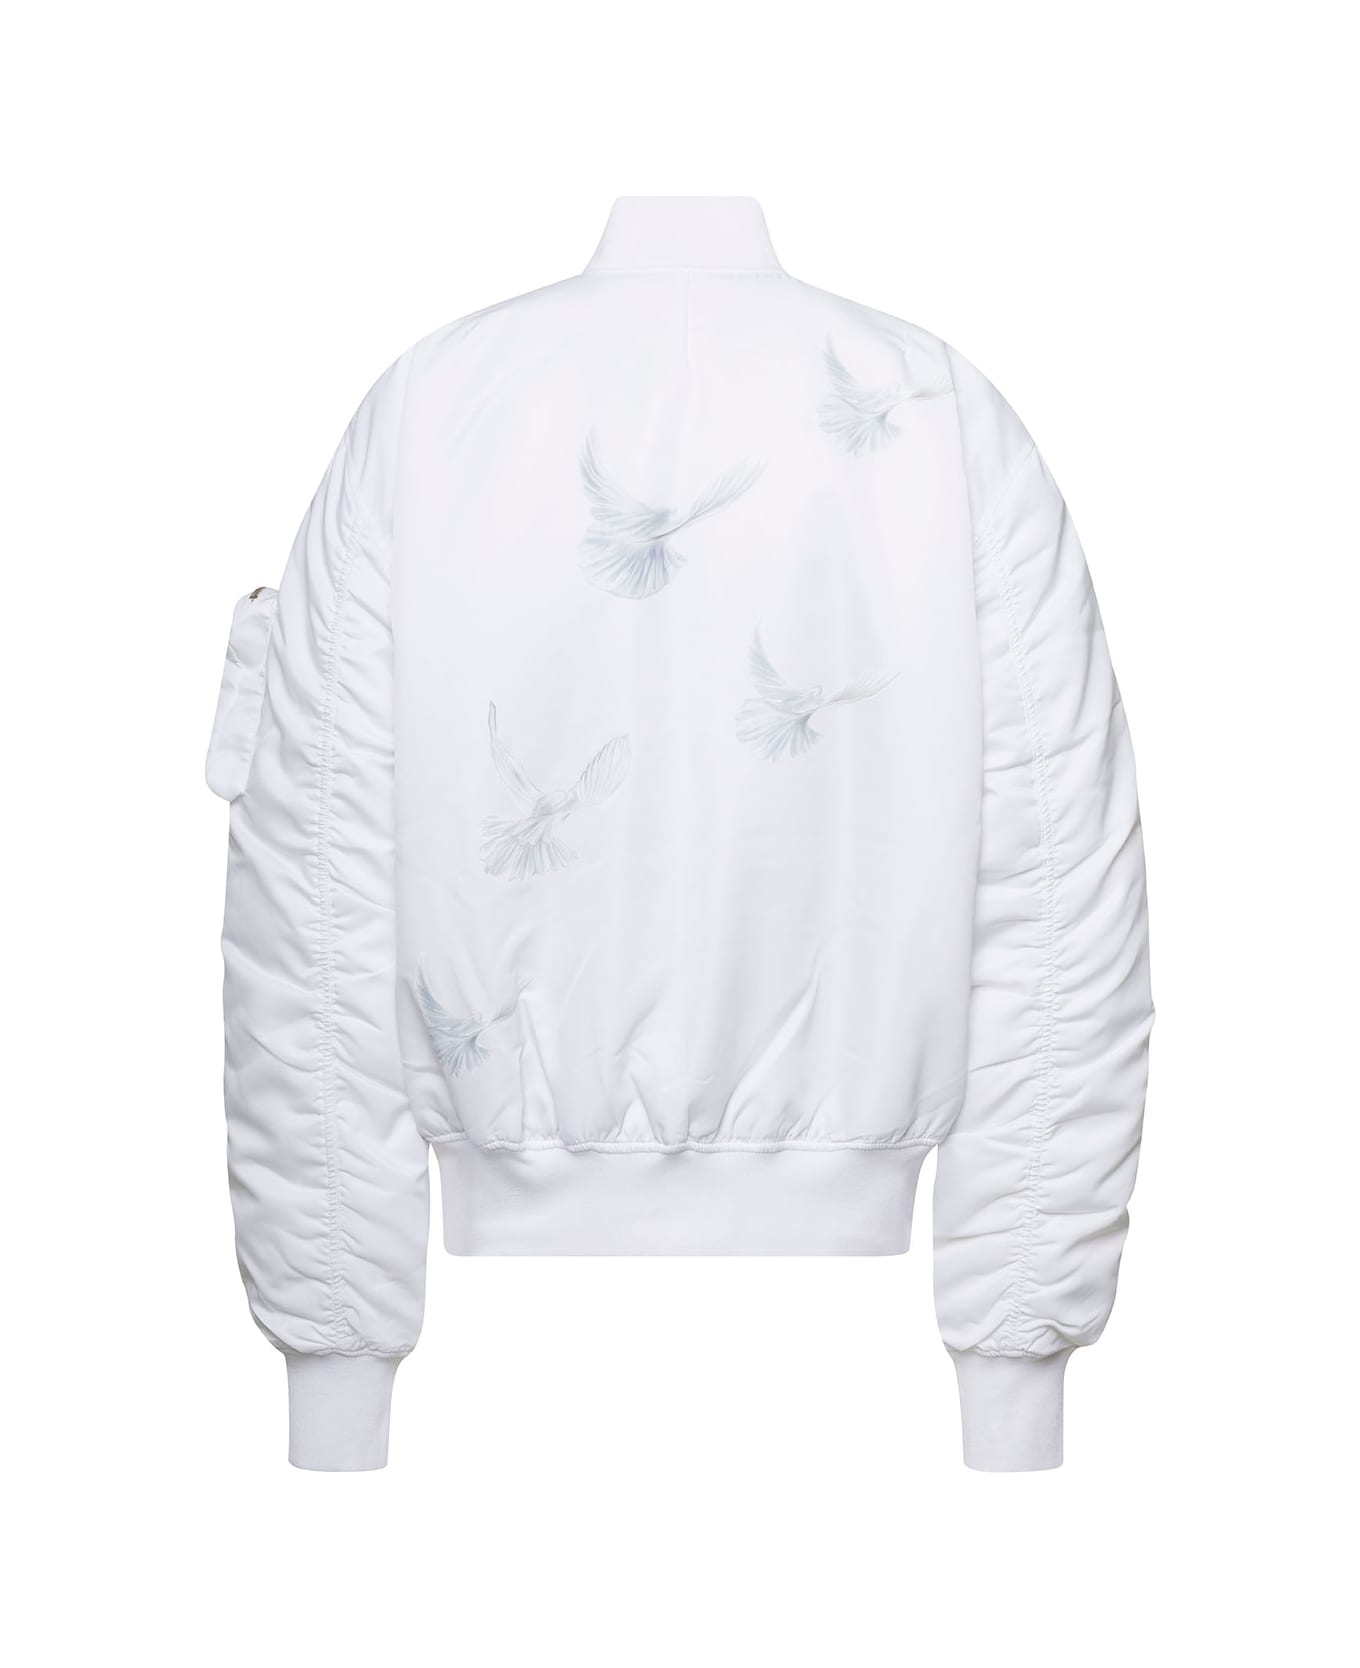 3.Paradis White Bomber Jacket With Dove Print On The Back In Nylon Woman - White